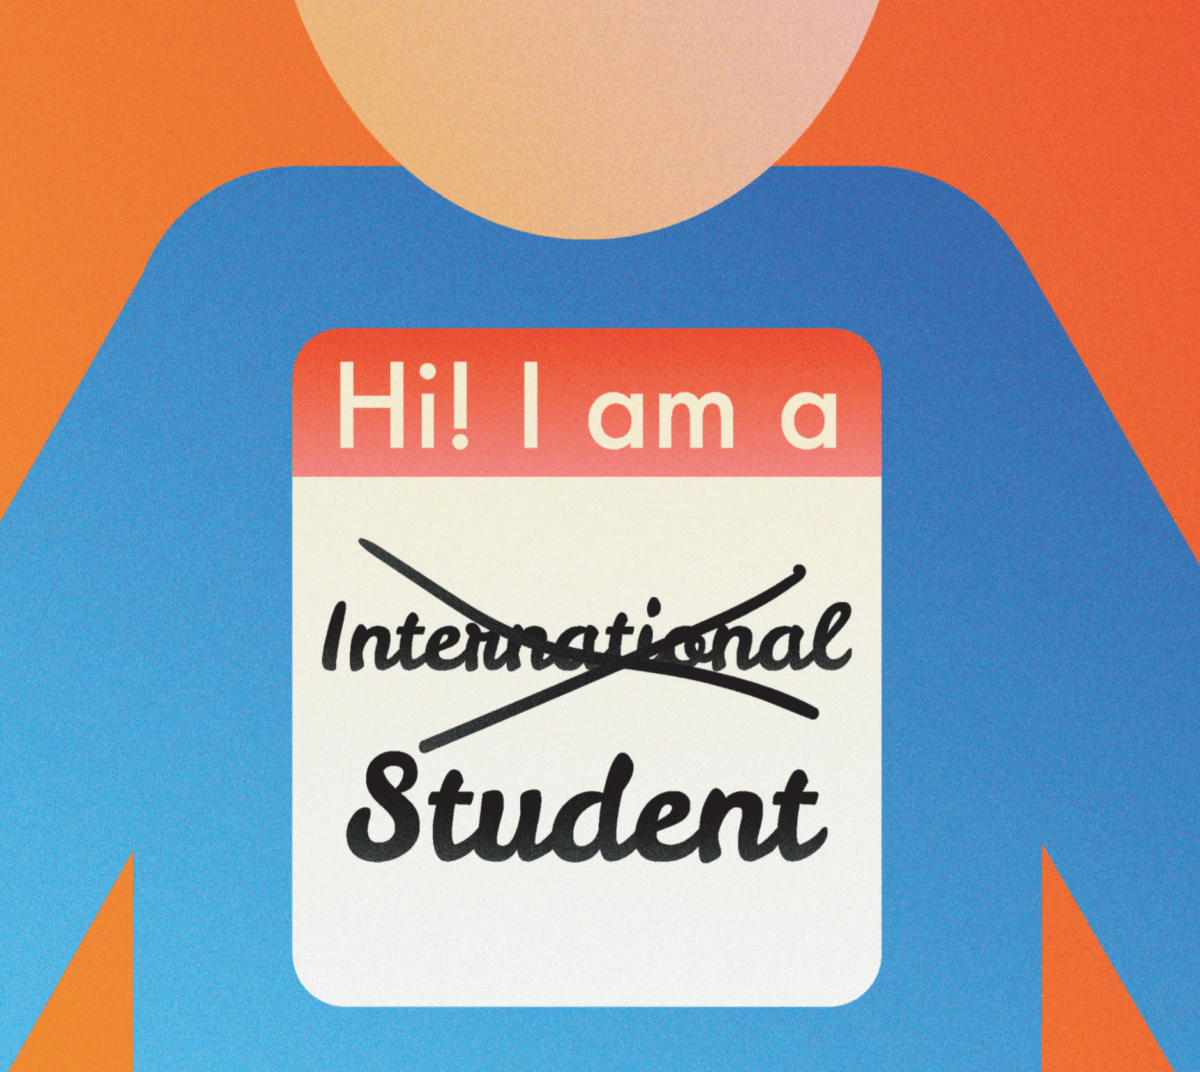 Name-tag reading: "Hi! I am a *international* student"